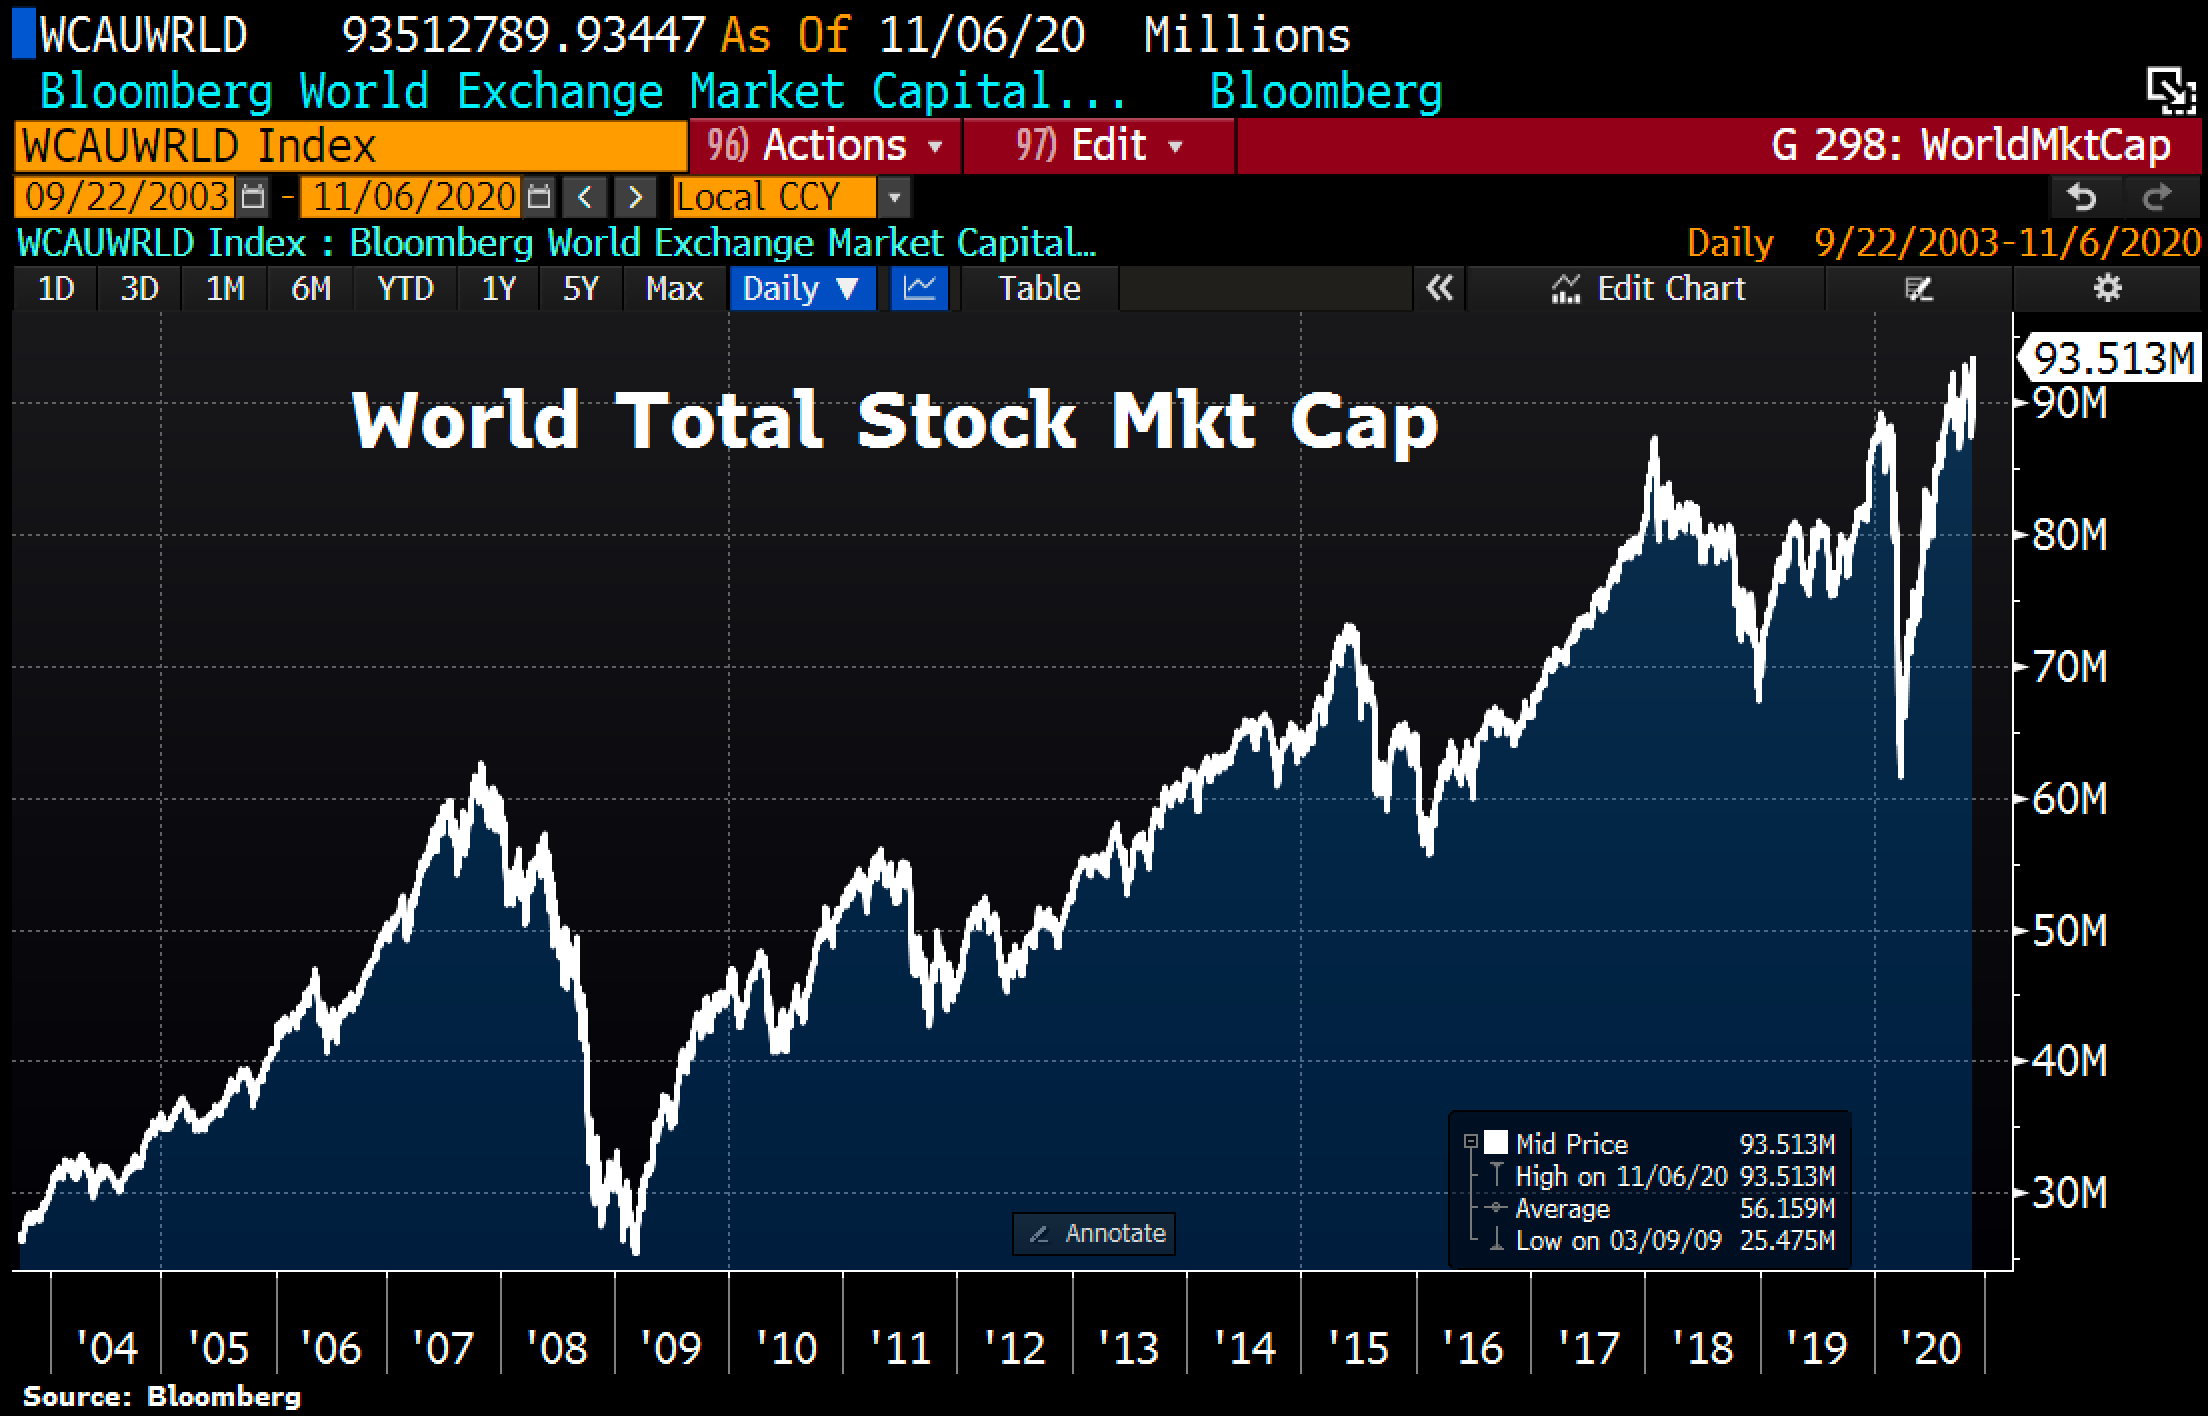 Global stocks Market Cap 